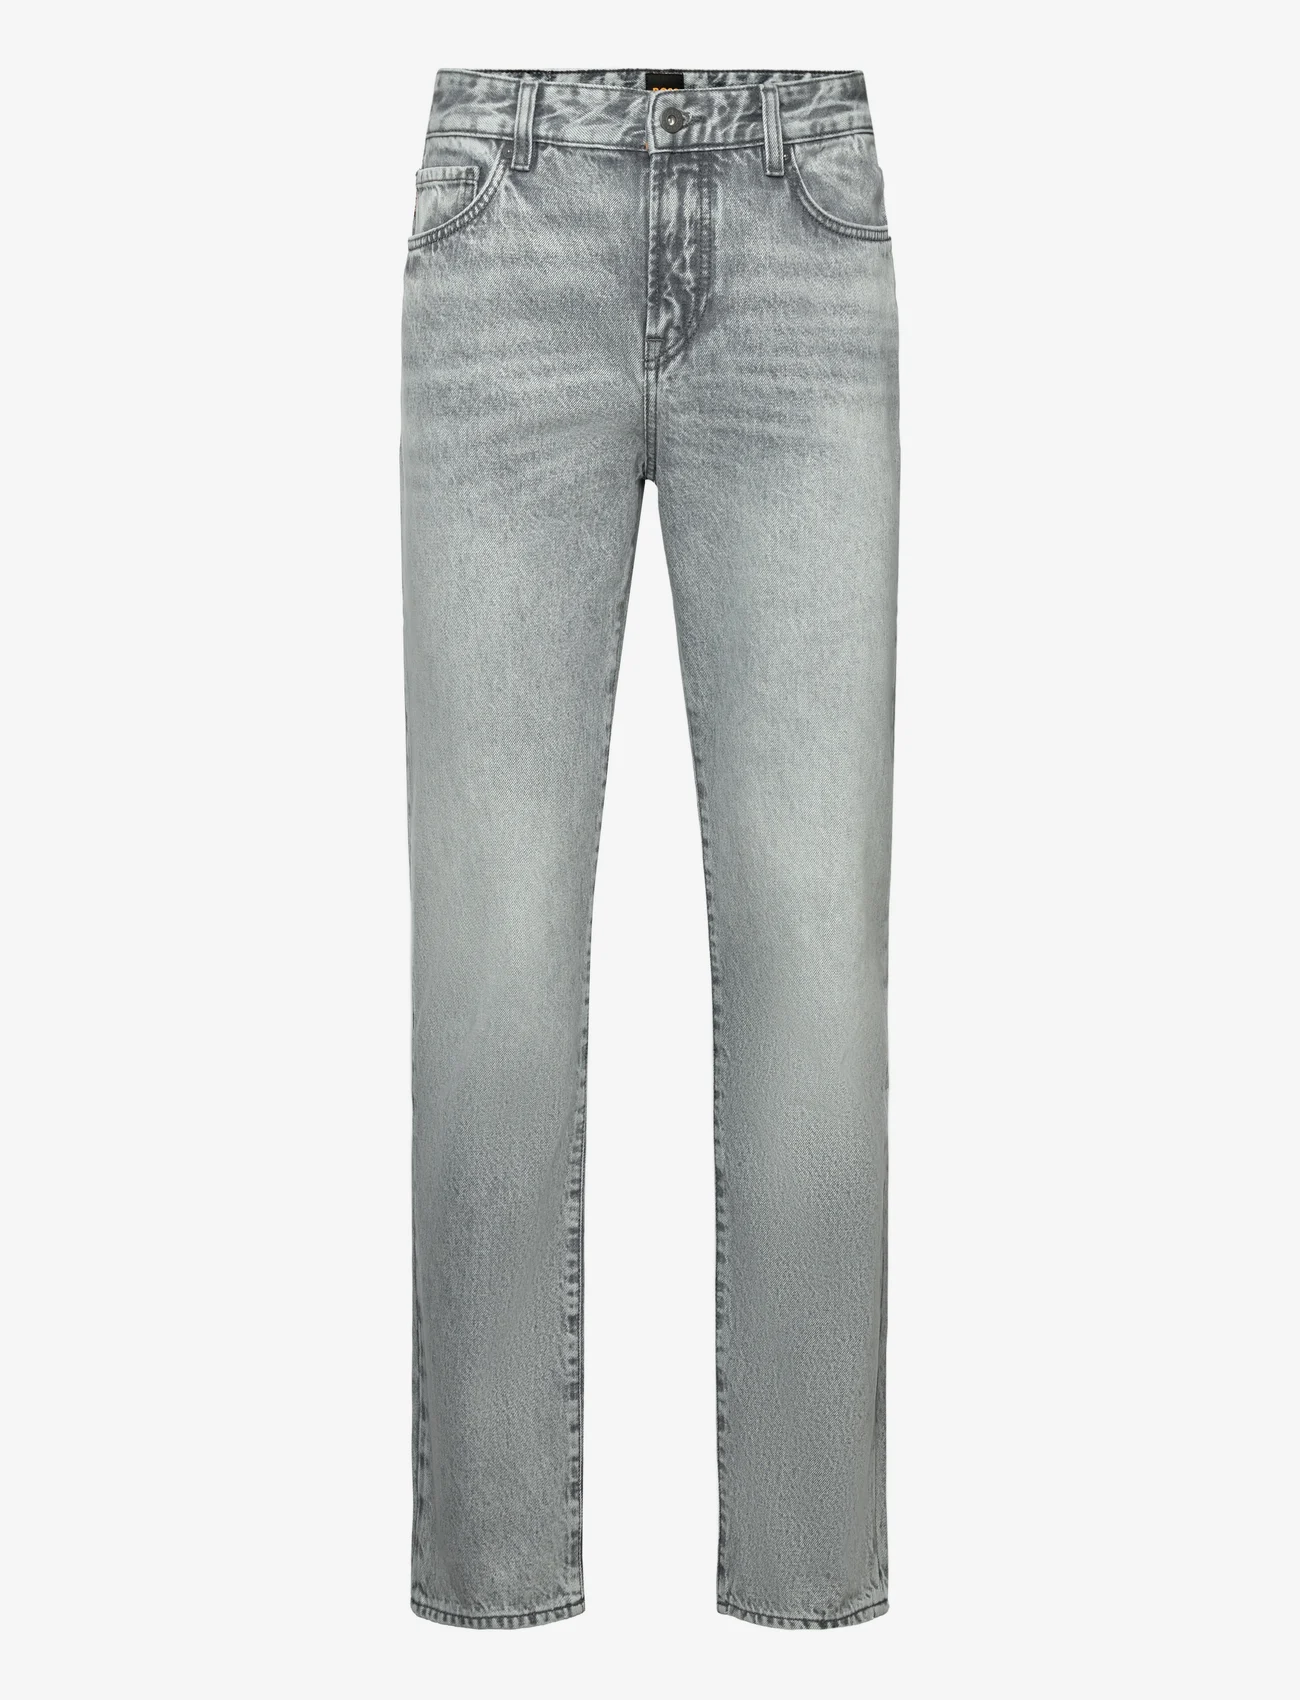 BOSS - Re.Maine BC - regular jeans - light/pastel grey - 0